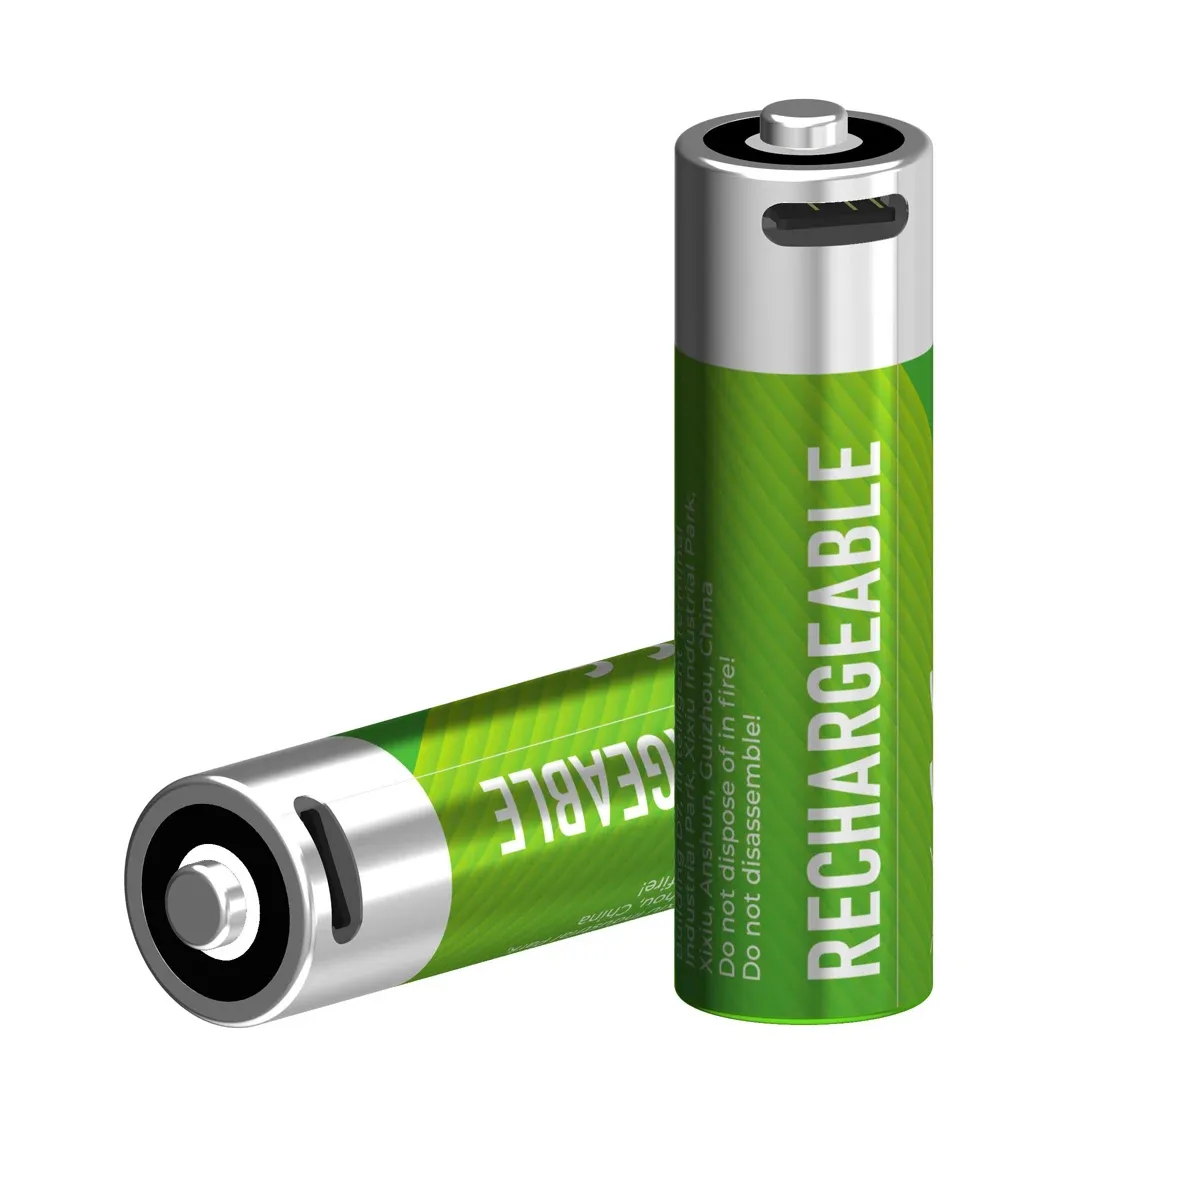 Buen precio Un paquete con 4 baterías tipo C batería de carga AA 1,5 V 2550mWh Baterías recargables USB de iones de litio